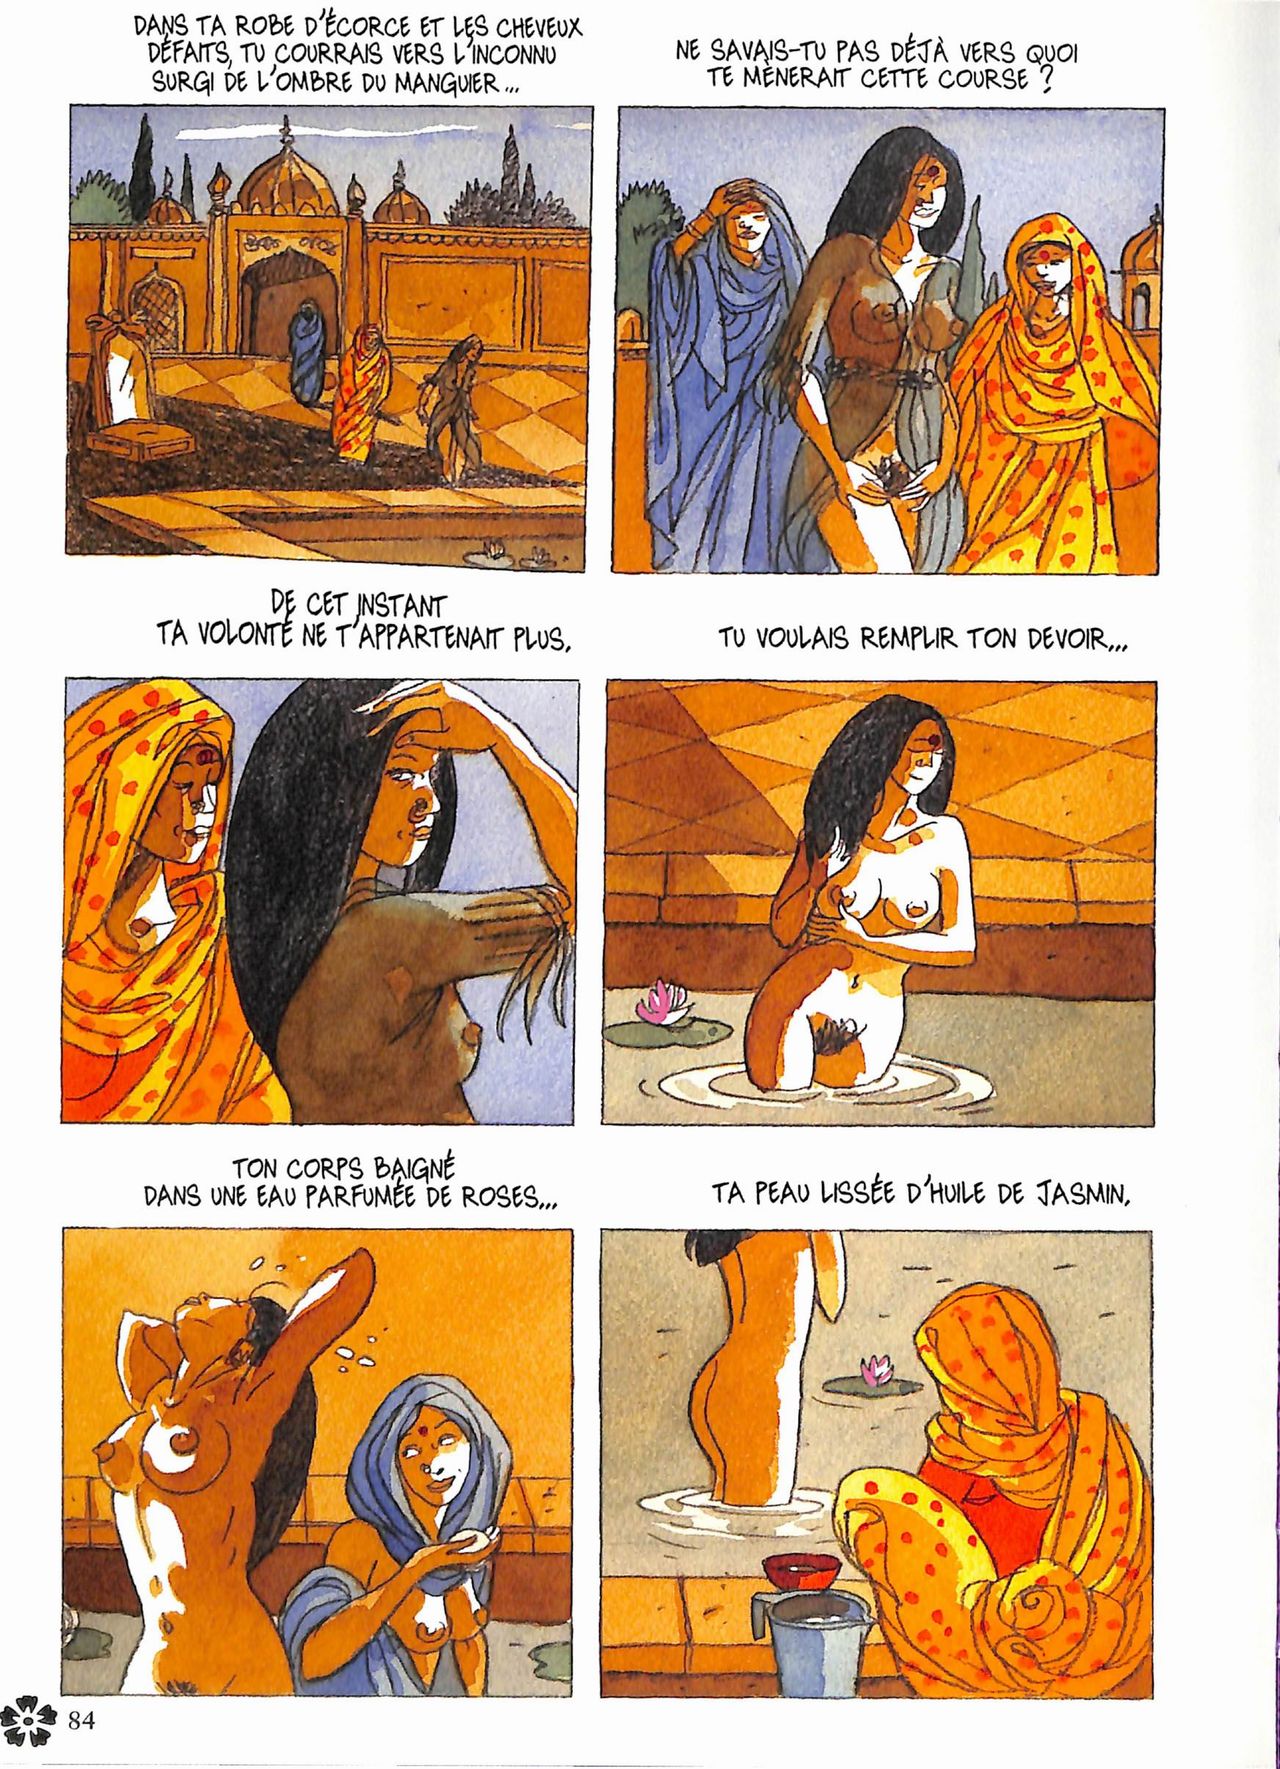 Kama Sutra en bandes dessinées - Kama Sutra with Comics numero d'image 85